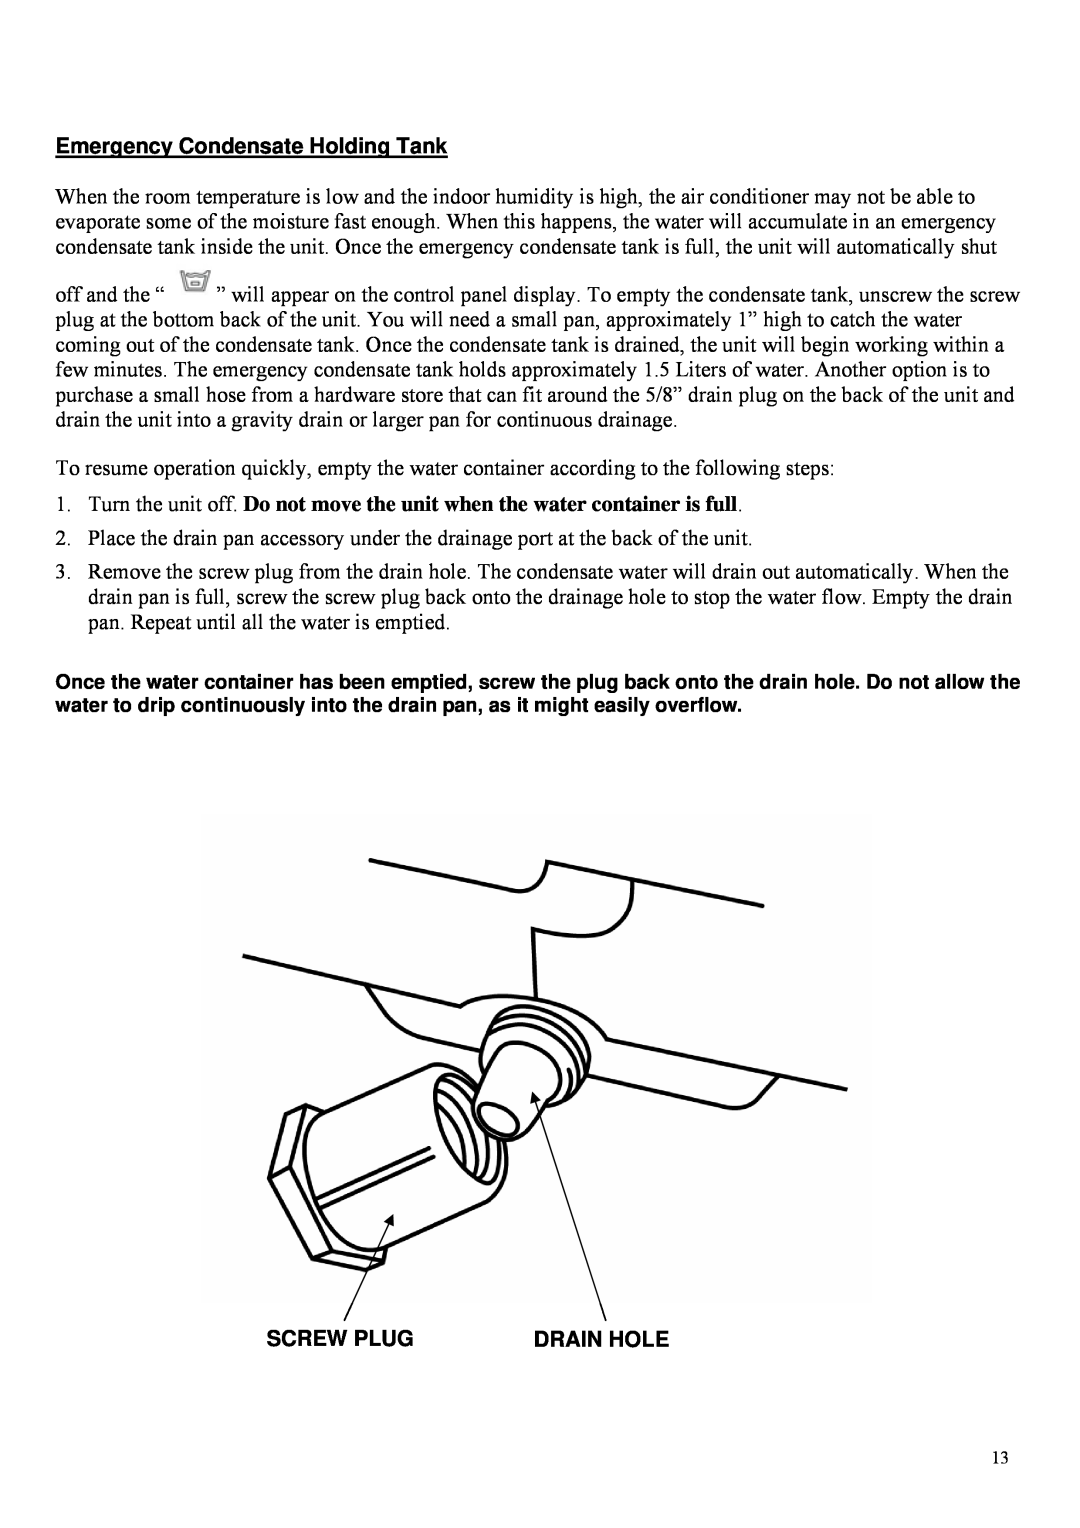 Soleus Air PH4-13R-01 operating instructions Emergency Condensate Holding Tank, Screw Plug, Drain Hole 